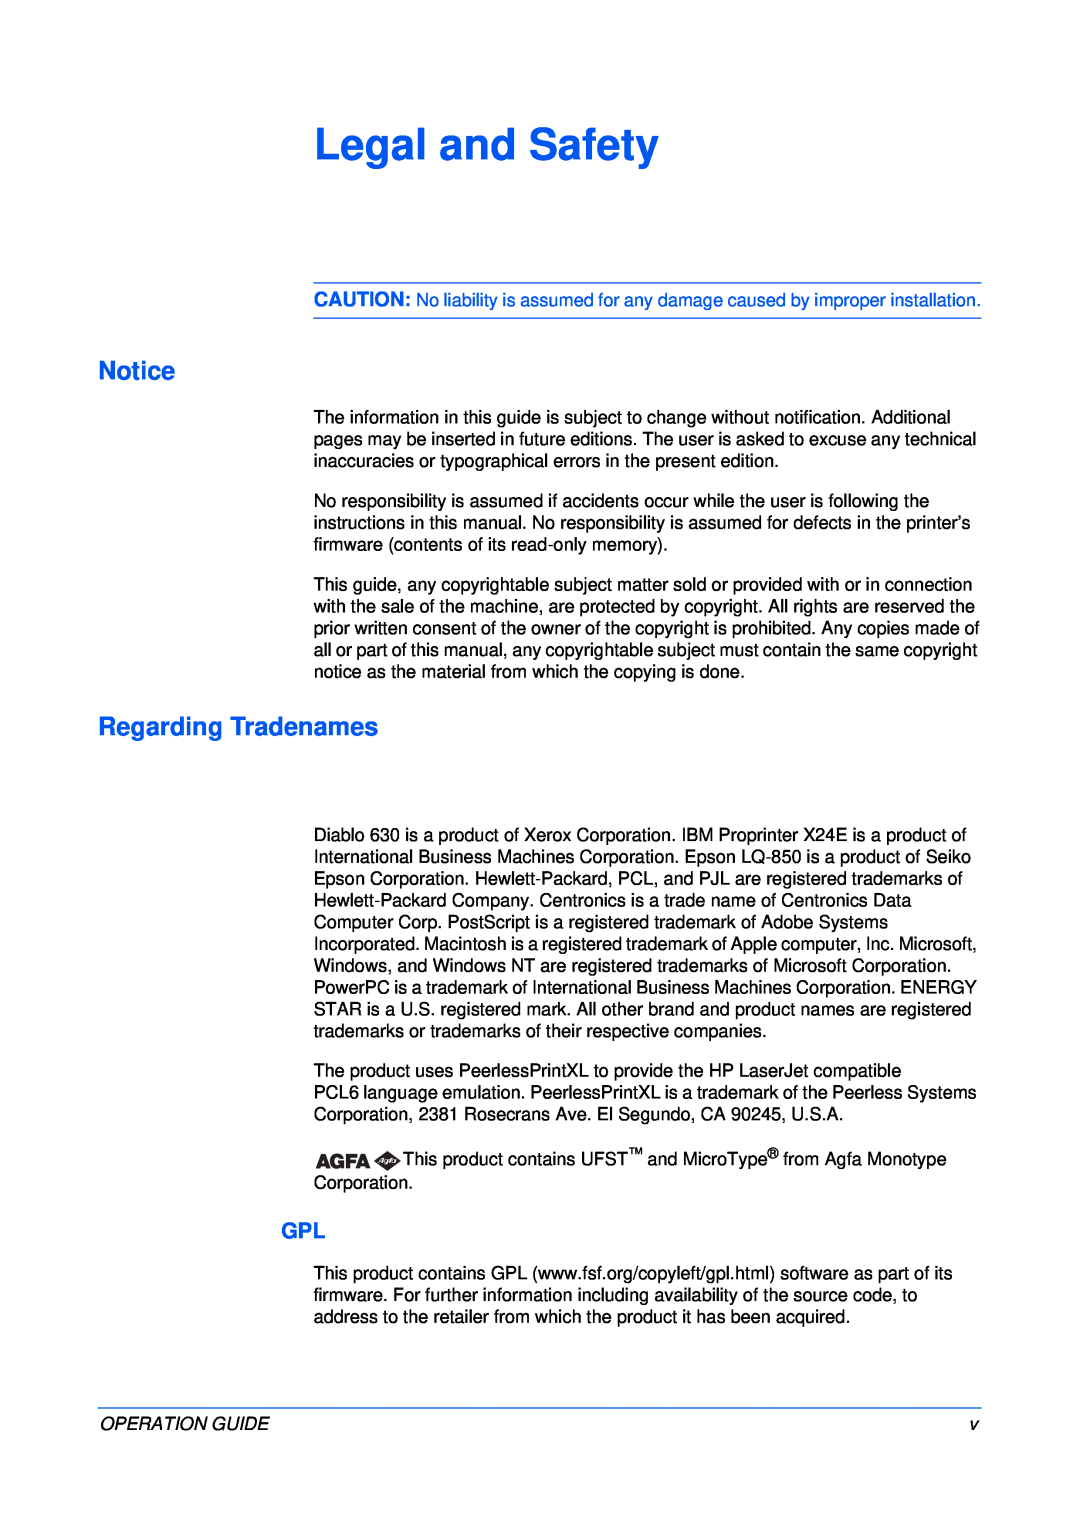 Olivetti 18MF manual Legal and Safety, Regarding Tradenames 